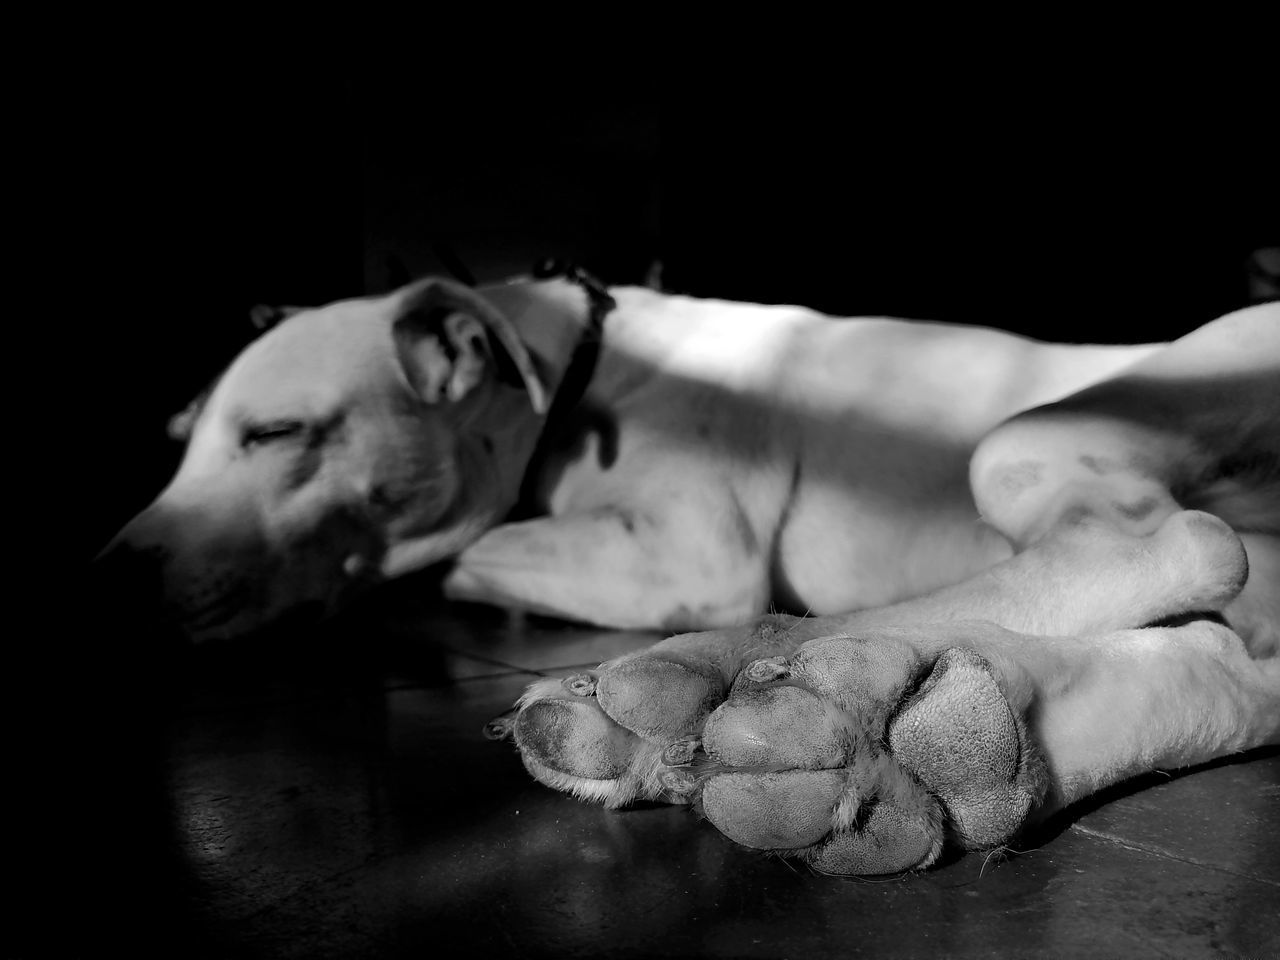 CLOSE-UP OF DOG SLEEPING ON FLOOR AT BLACK BACKGROUND